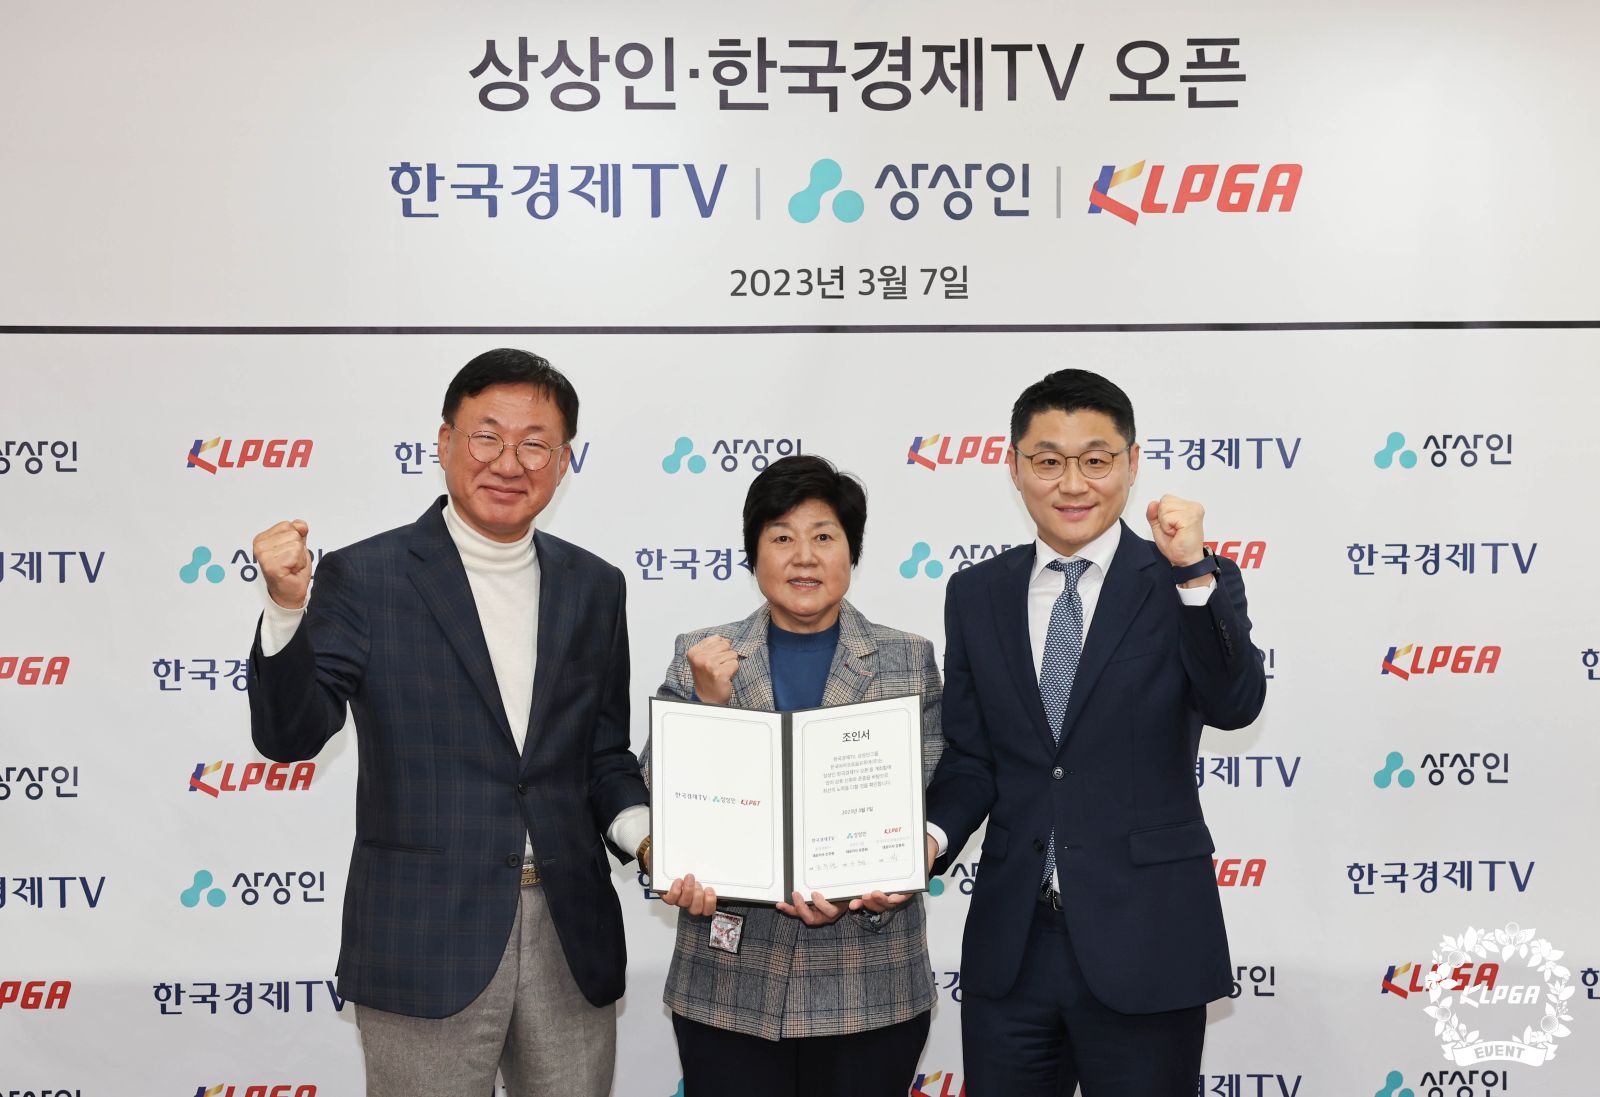 KLPGT, ‘상상인·한국경제TV 오픈’ 대회 개최 조인식 가져